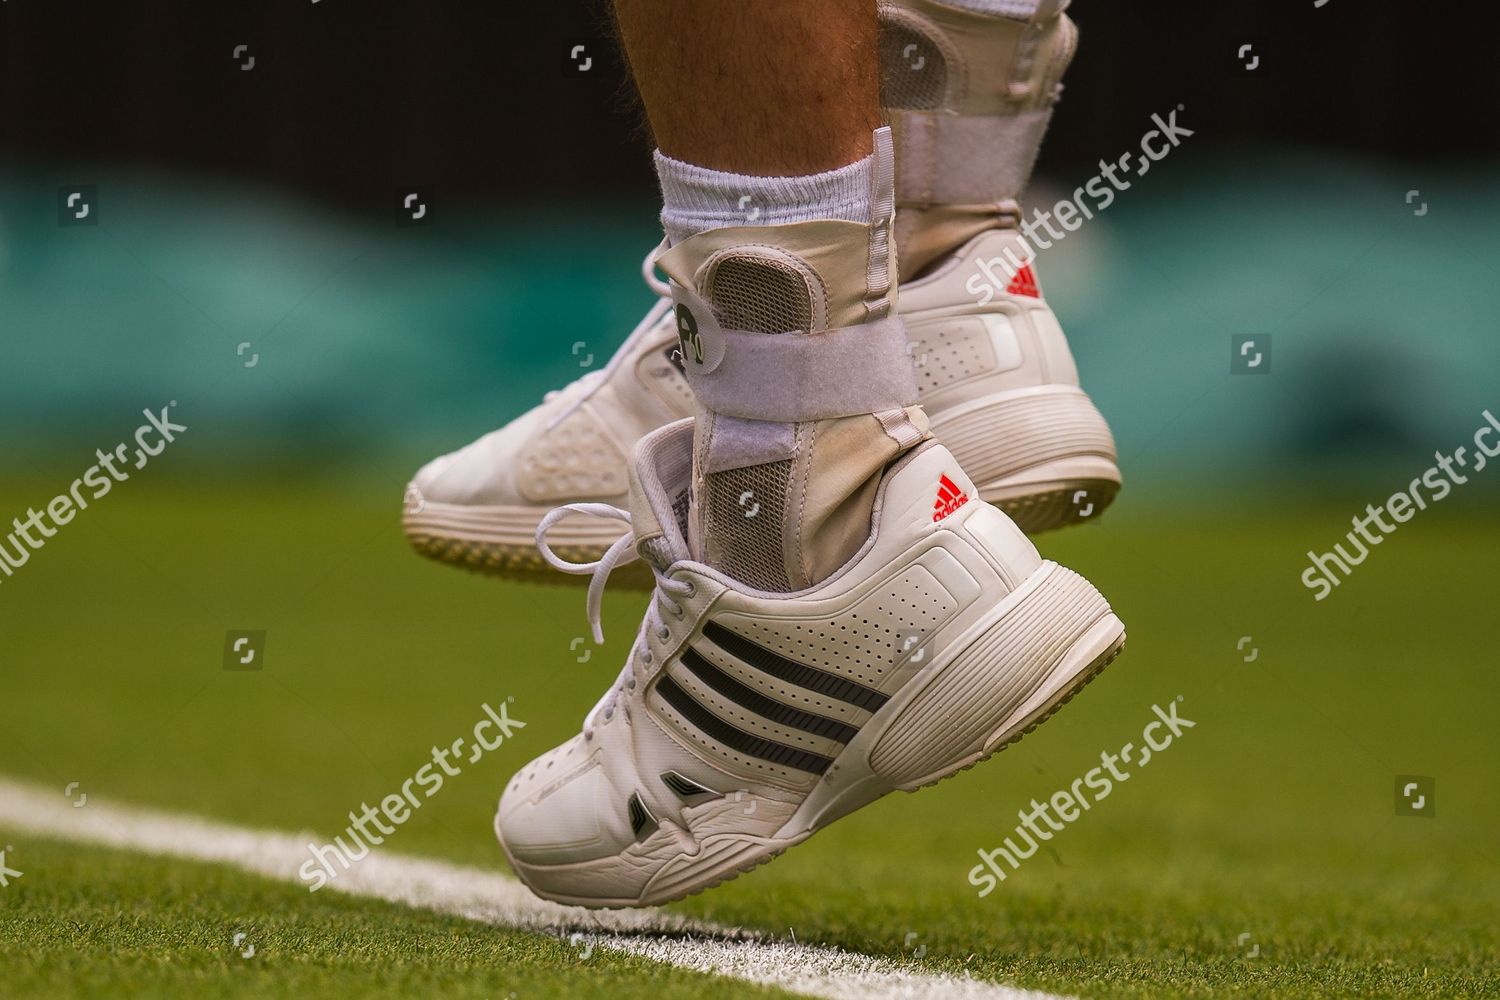 Adidas Tennis Shoes Andy Murray Gbr Foto de stock de contenido editorial: imagen de stock Shutterstock